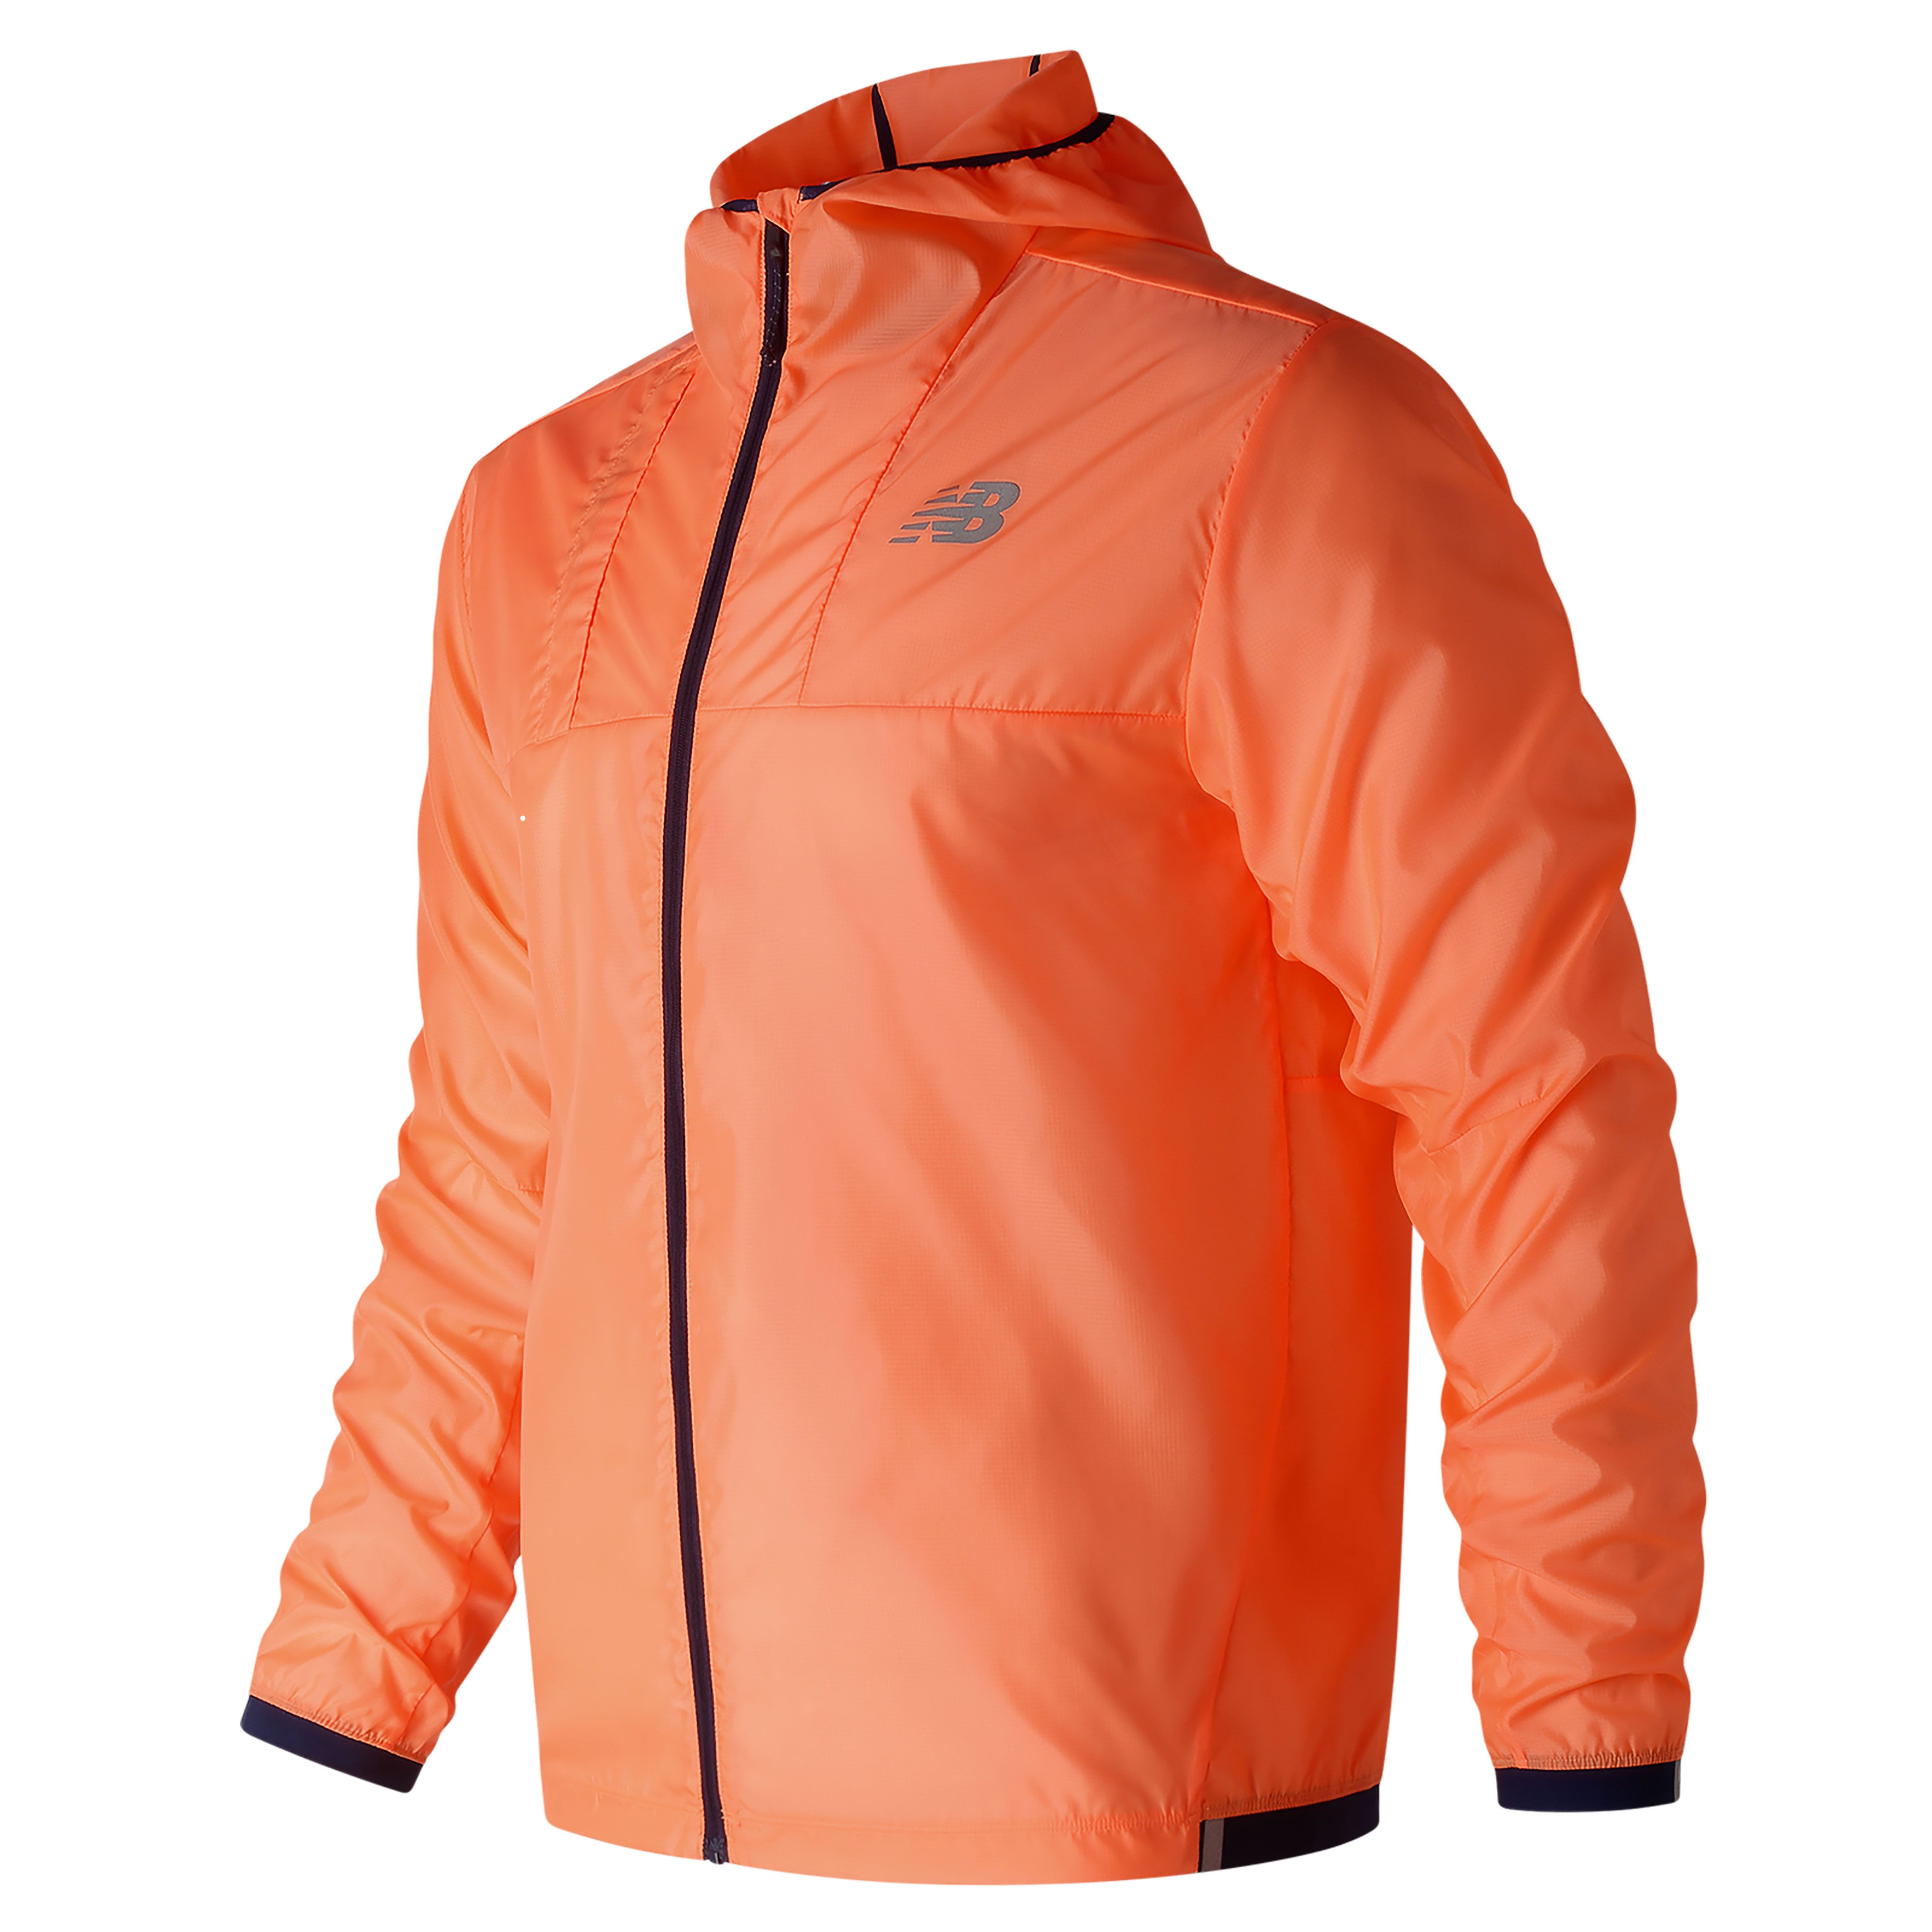 Куртка new balance. Super Light Packable Jacket. Ветровка New Balance мужская оранжевая. Куртка New Balance мужская.